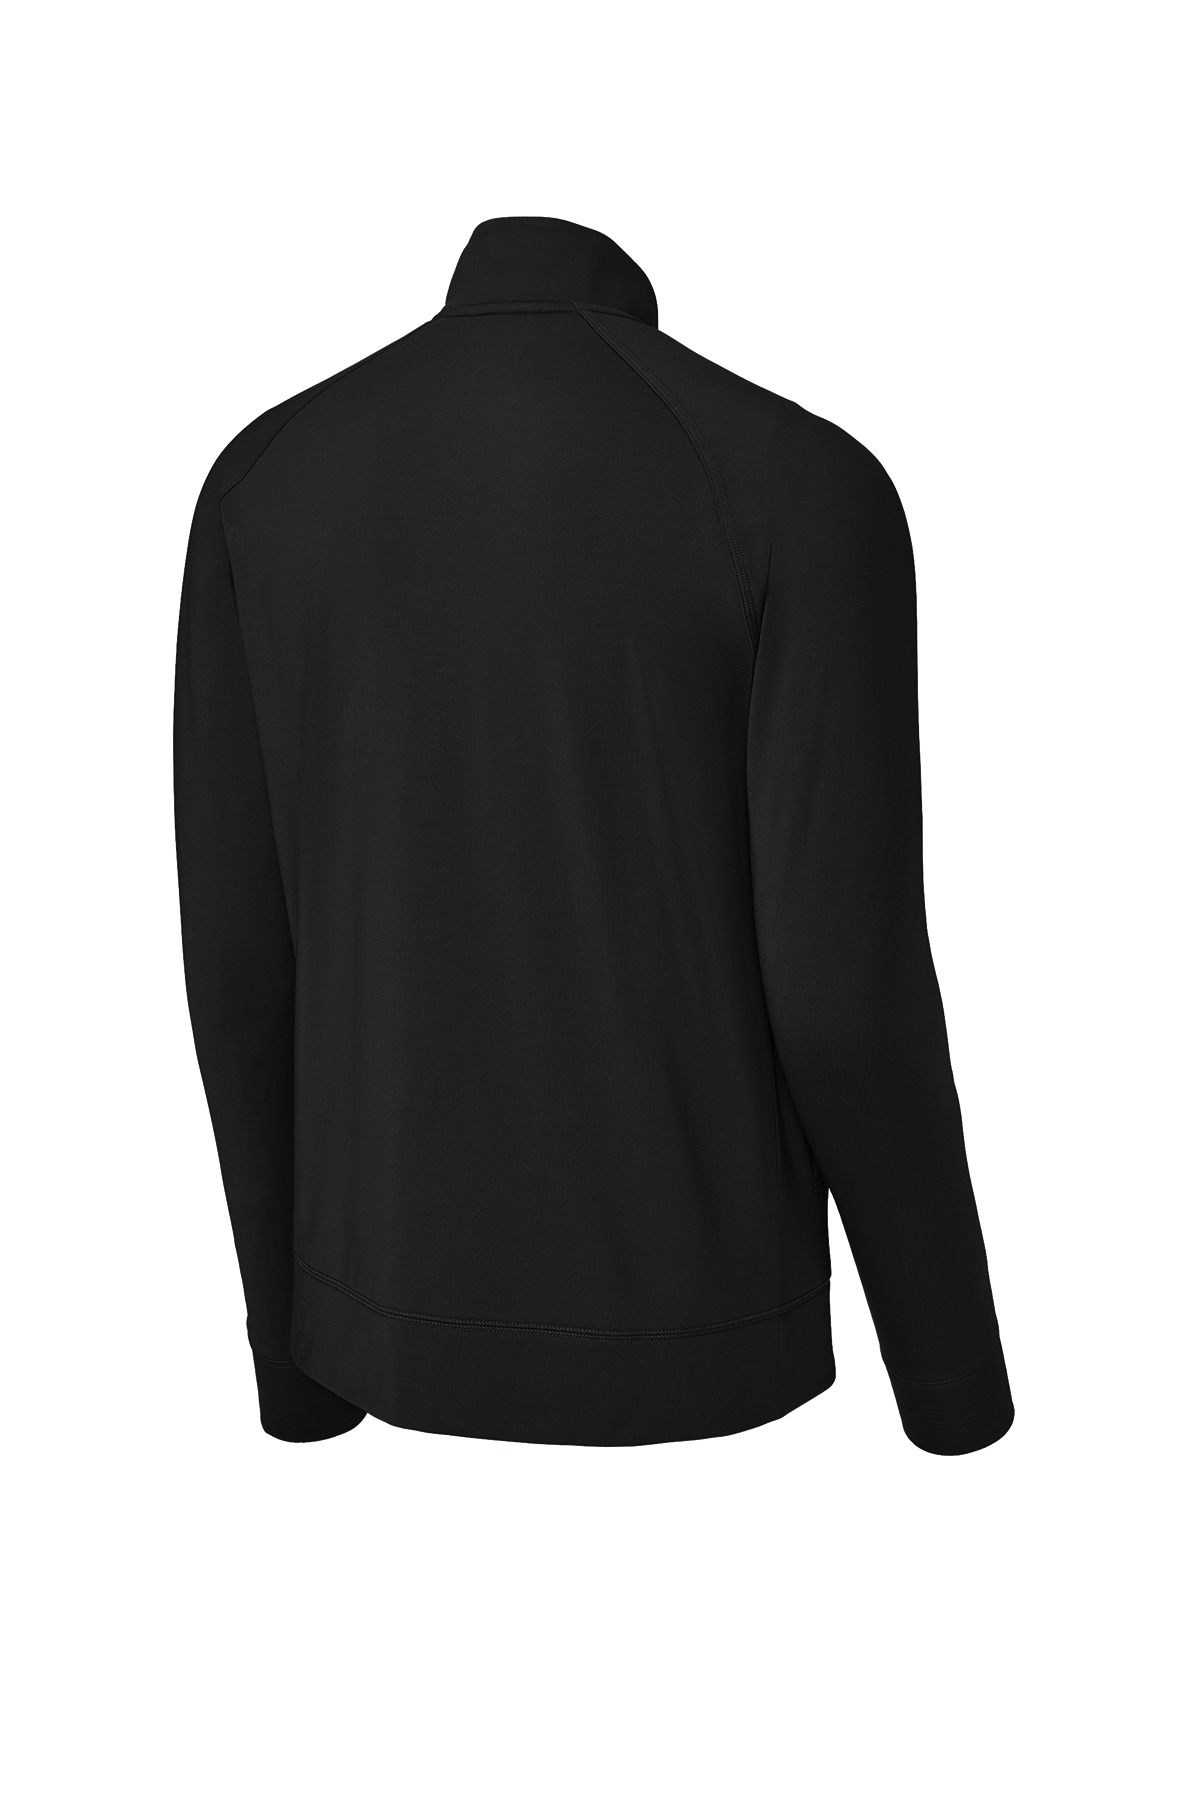 SanMar Stretch | | Sport-Tek Sport-Wick Product Cadet Jacket Full-Zip